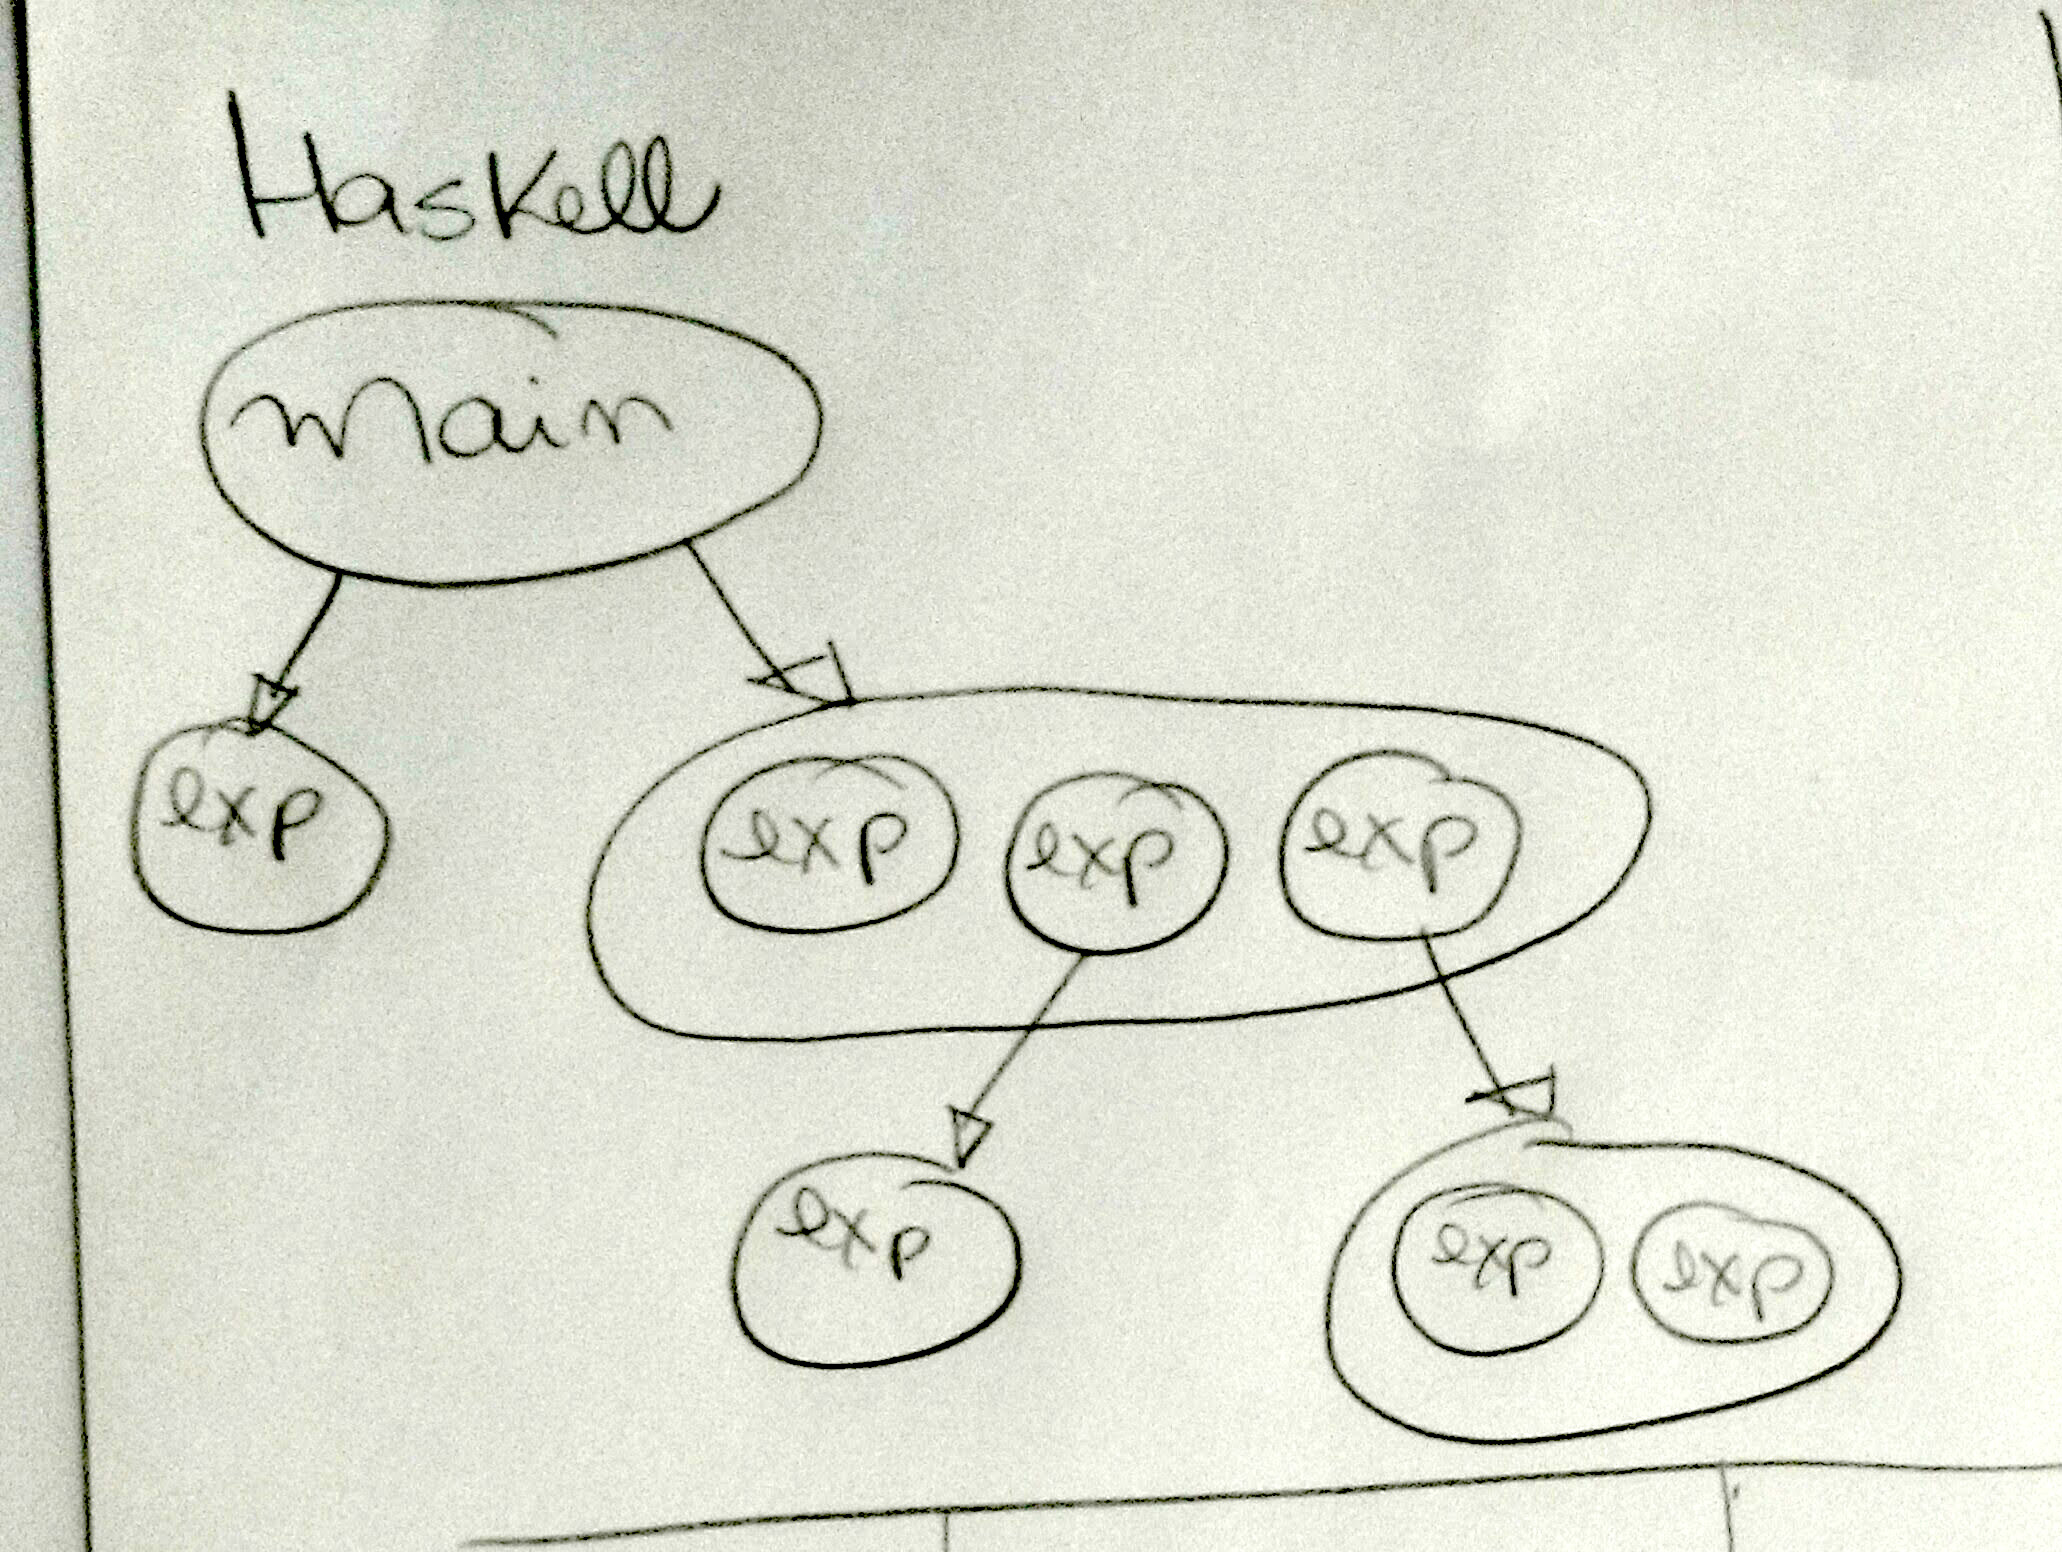 Modelo para o Haskell